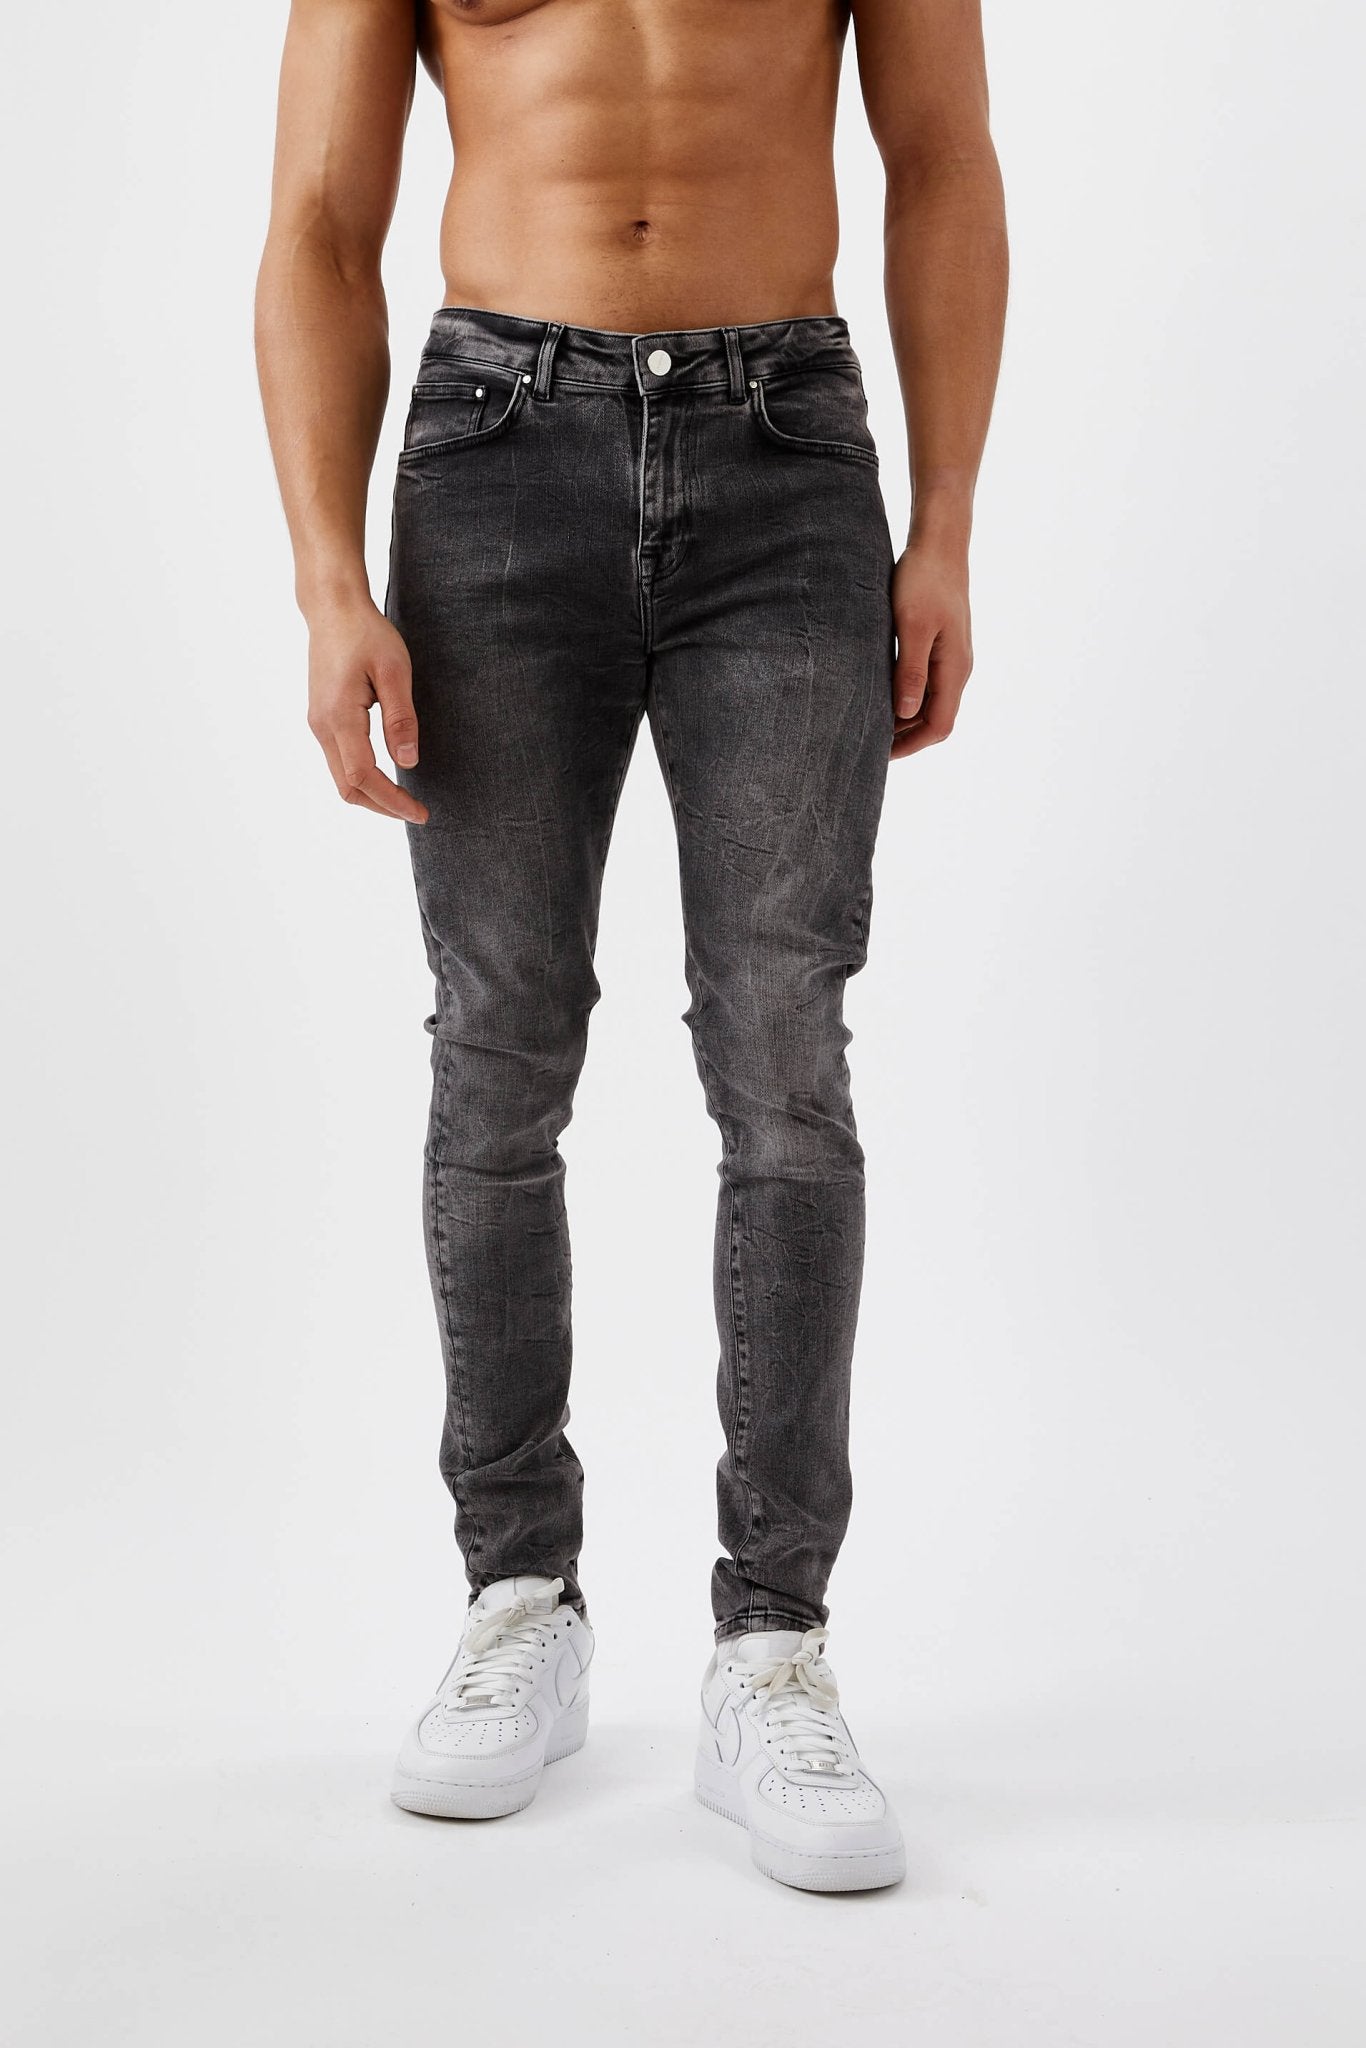 03. Shop by fit: Mens - Skinny Fit Jeans - Legend London